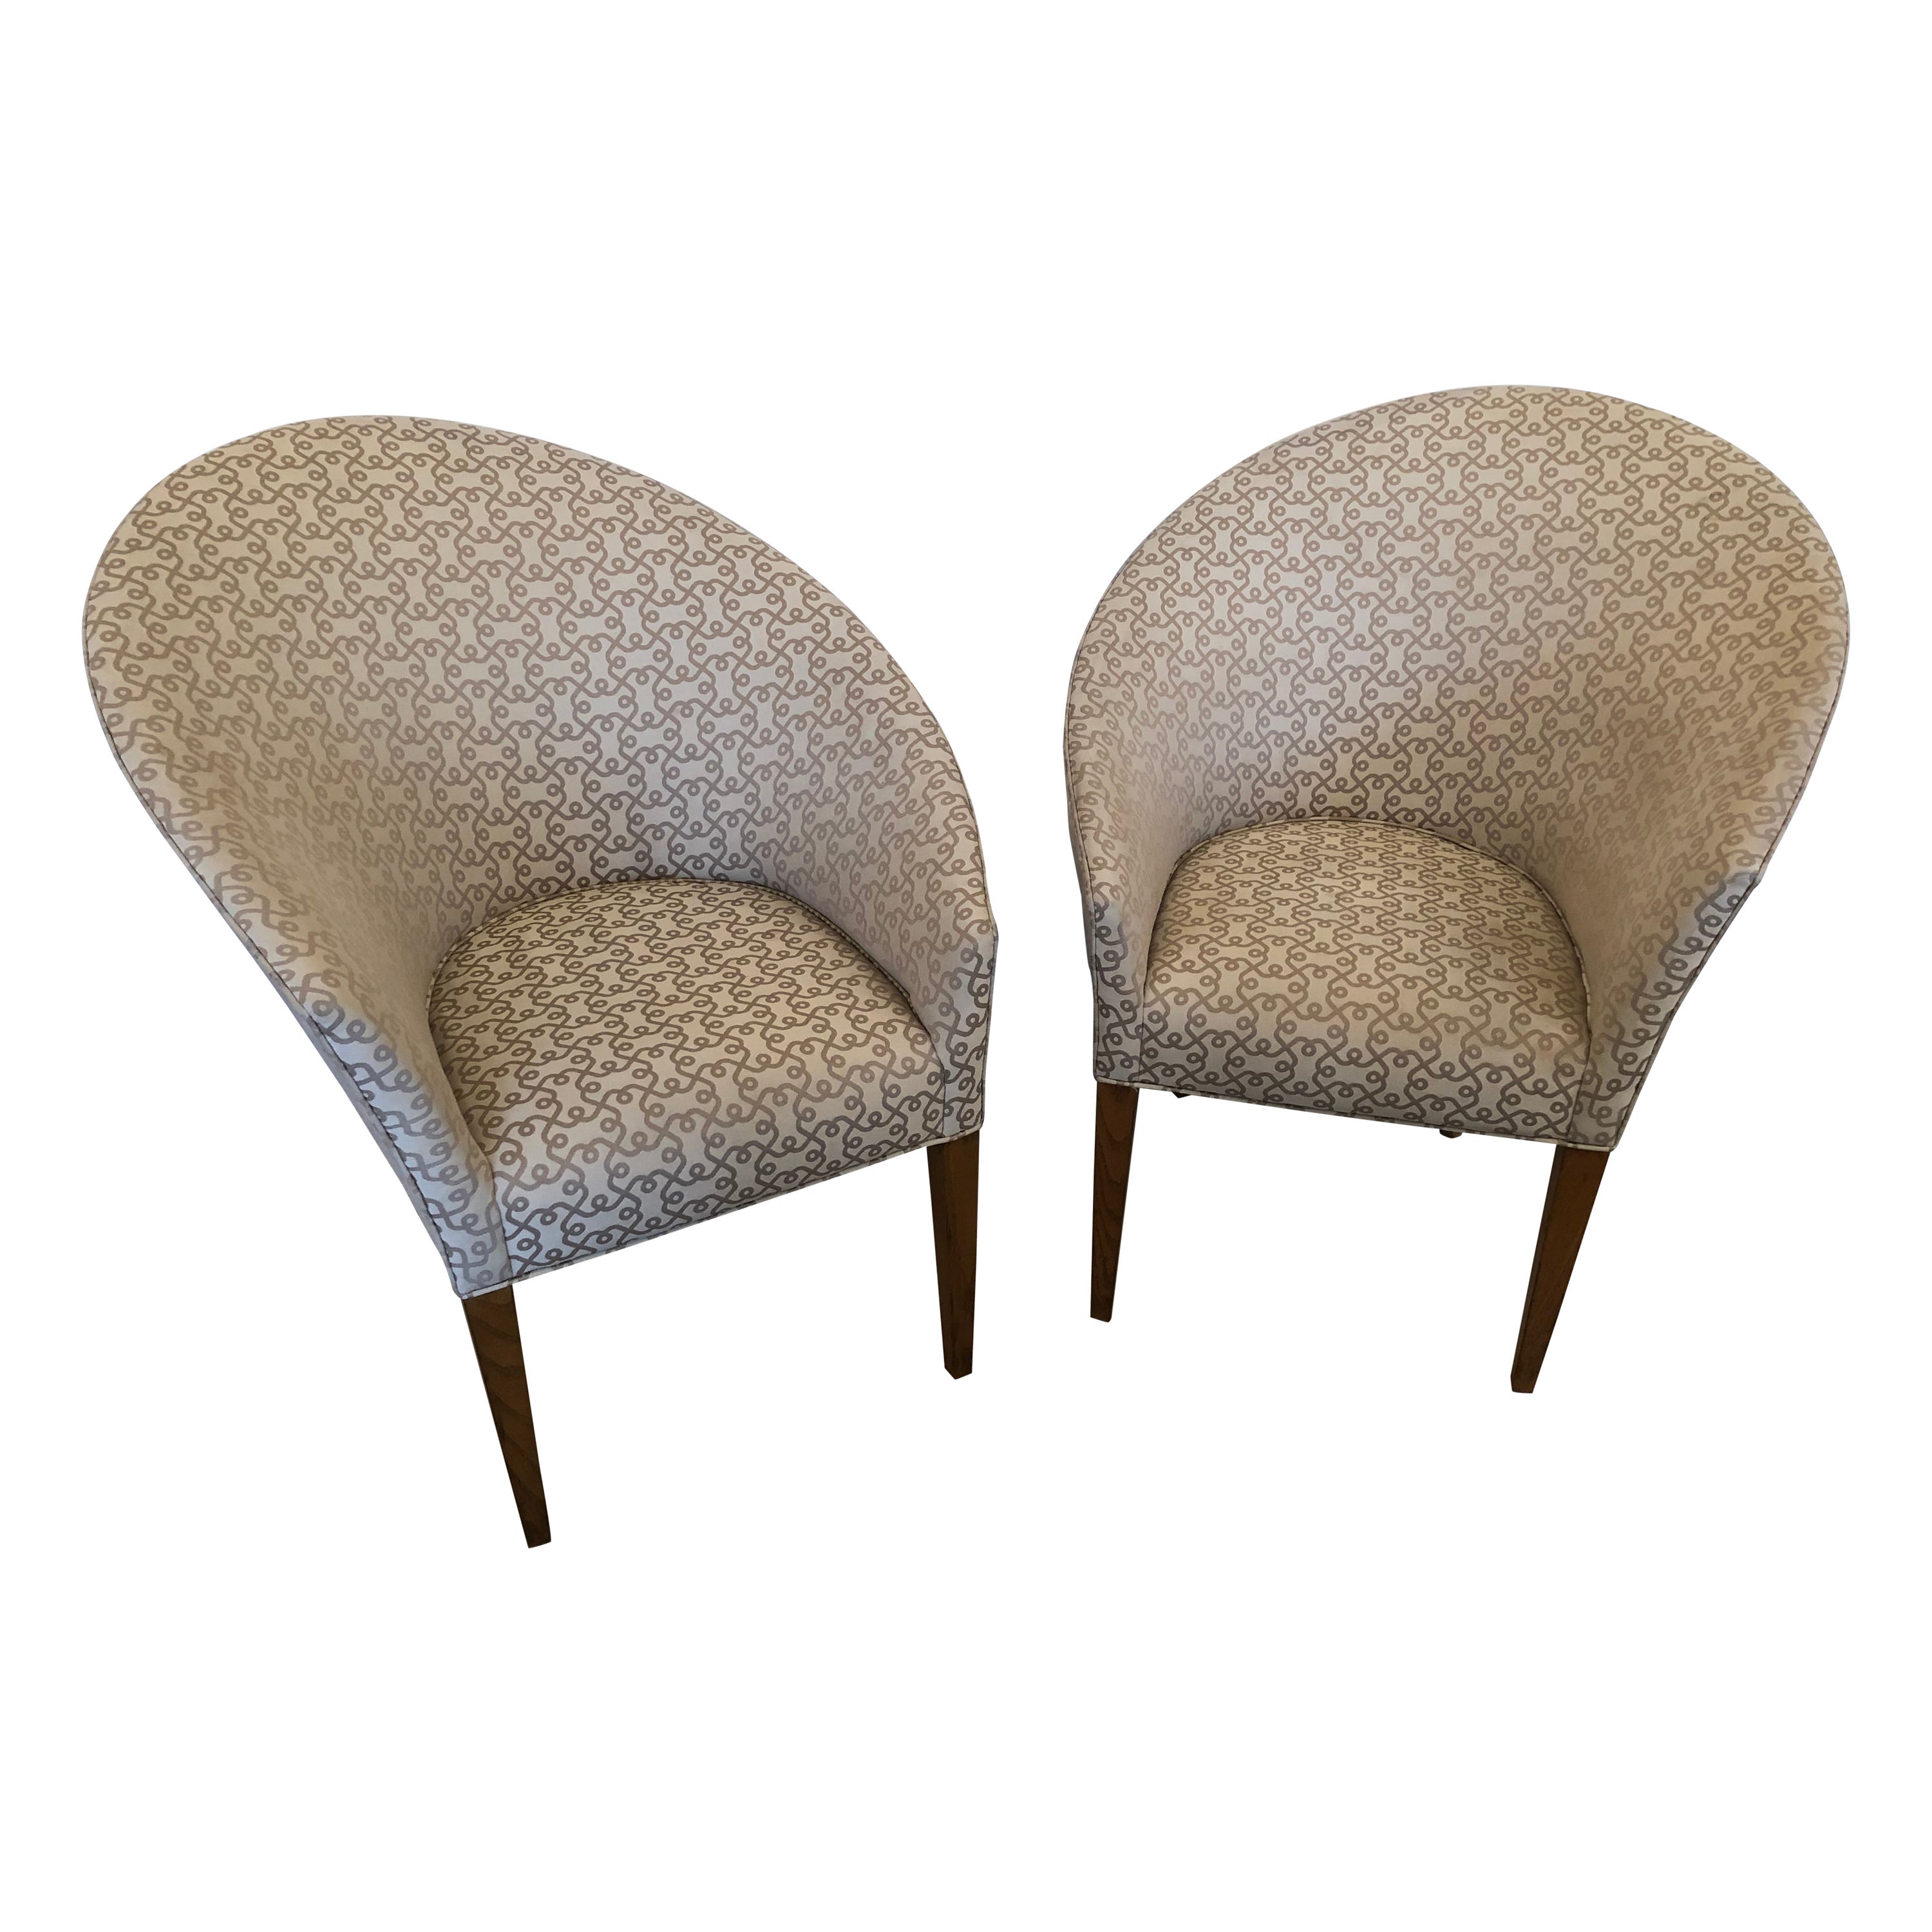 Super Stylish Asymmetrical Shaped Mid-Century Modern Club Chairs